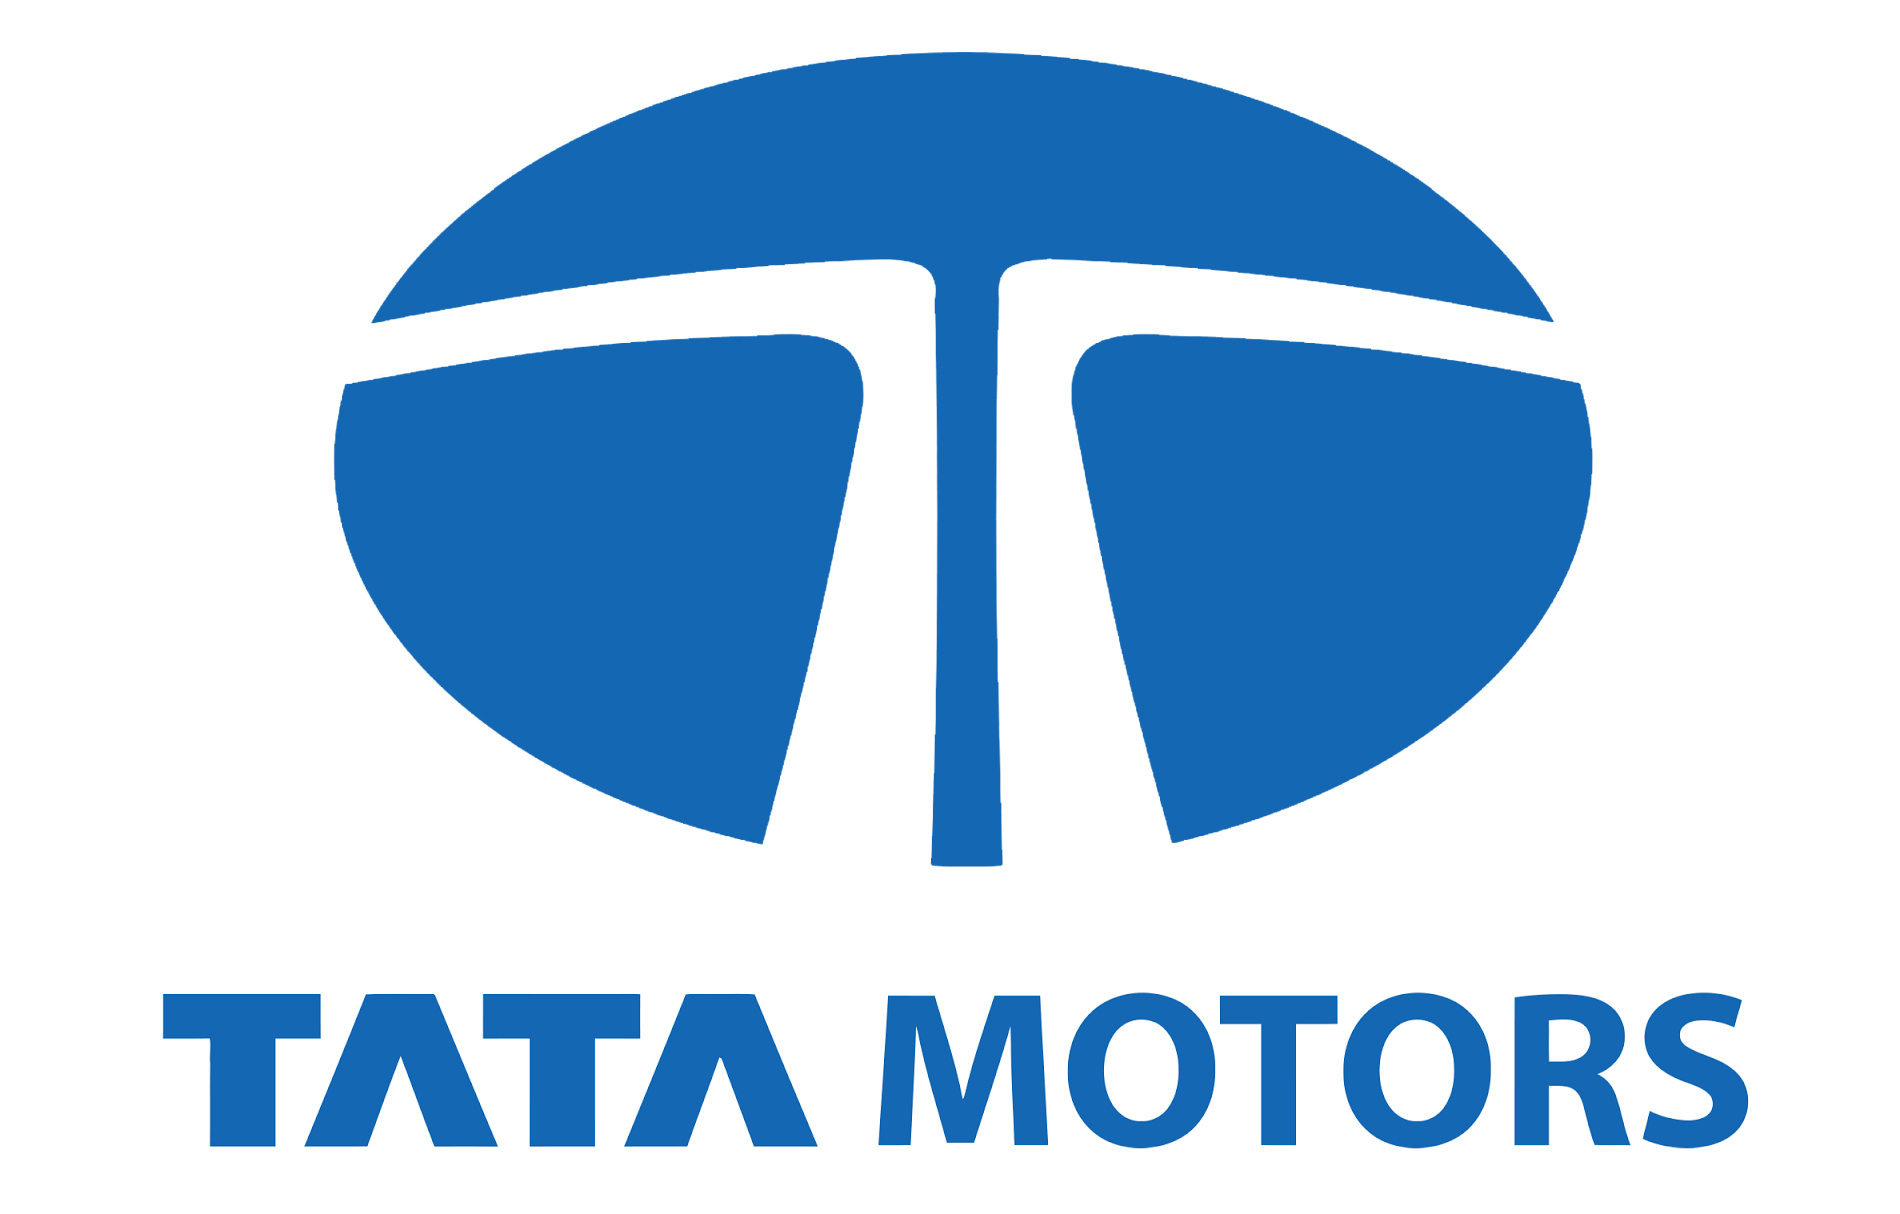 Tata Motors Cars Showroom - Venkataramana Motors|Show Room|Automotive